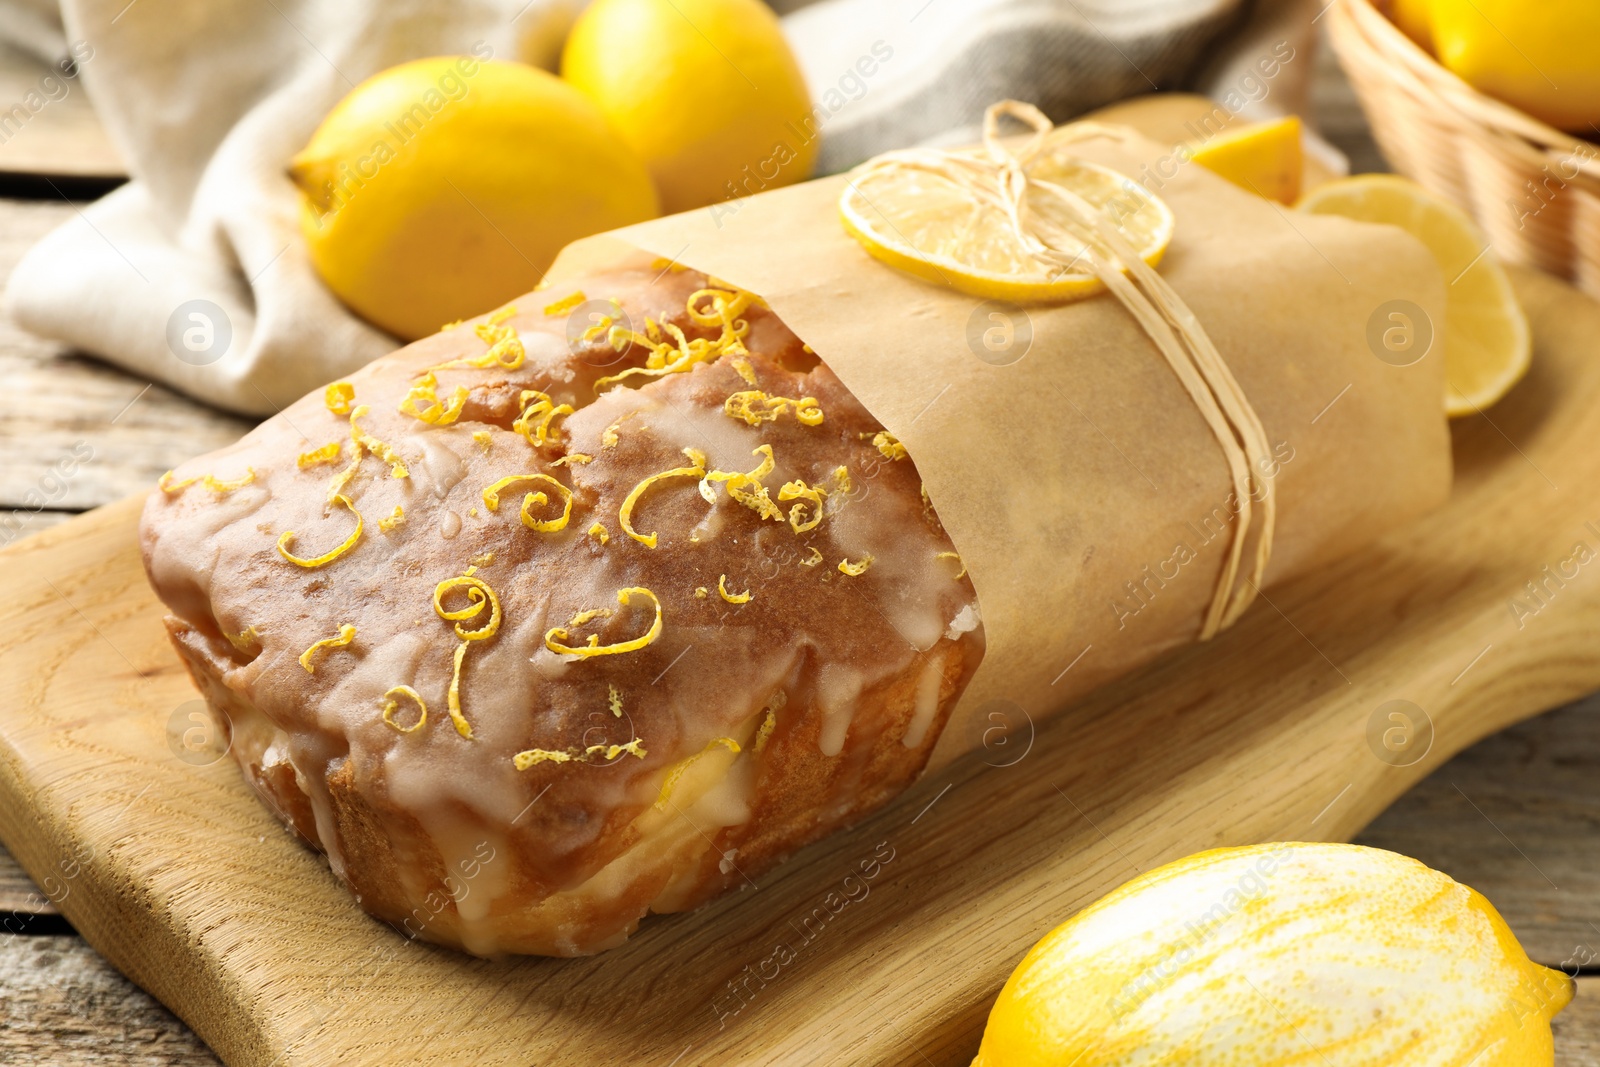 Photo of Wrapped tasty lemon cake with glaze on table, closeup